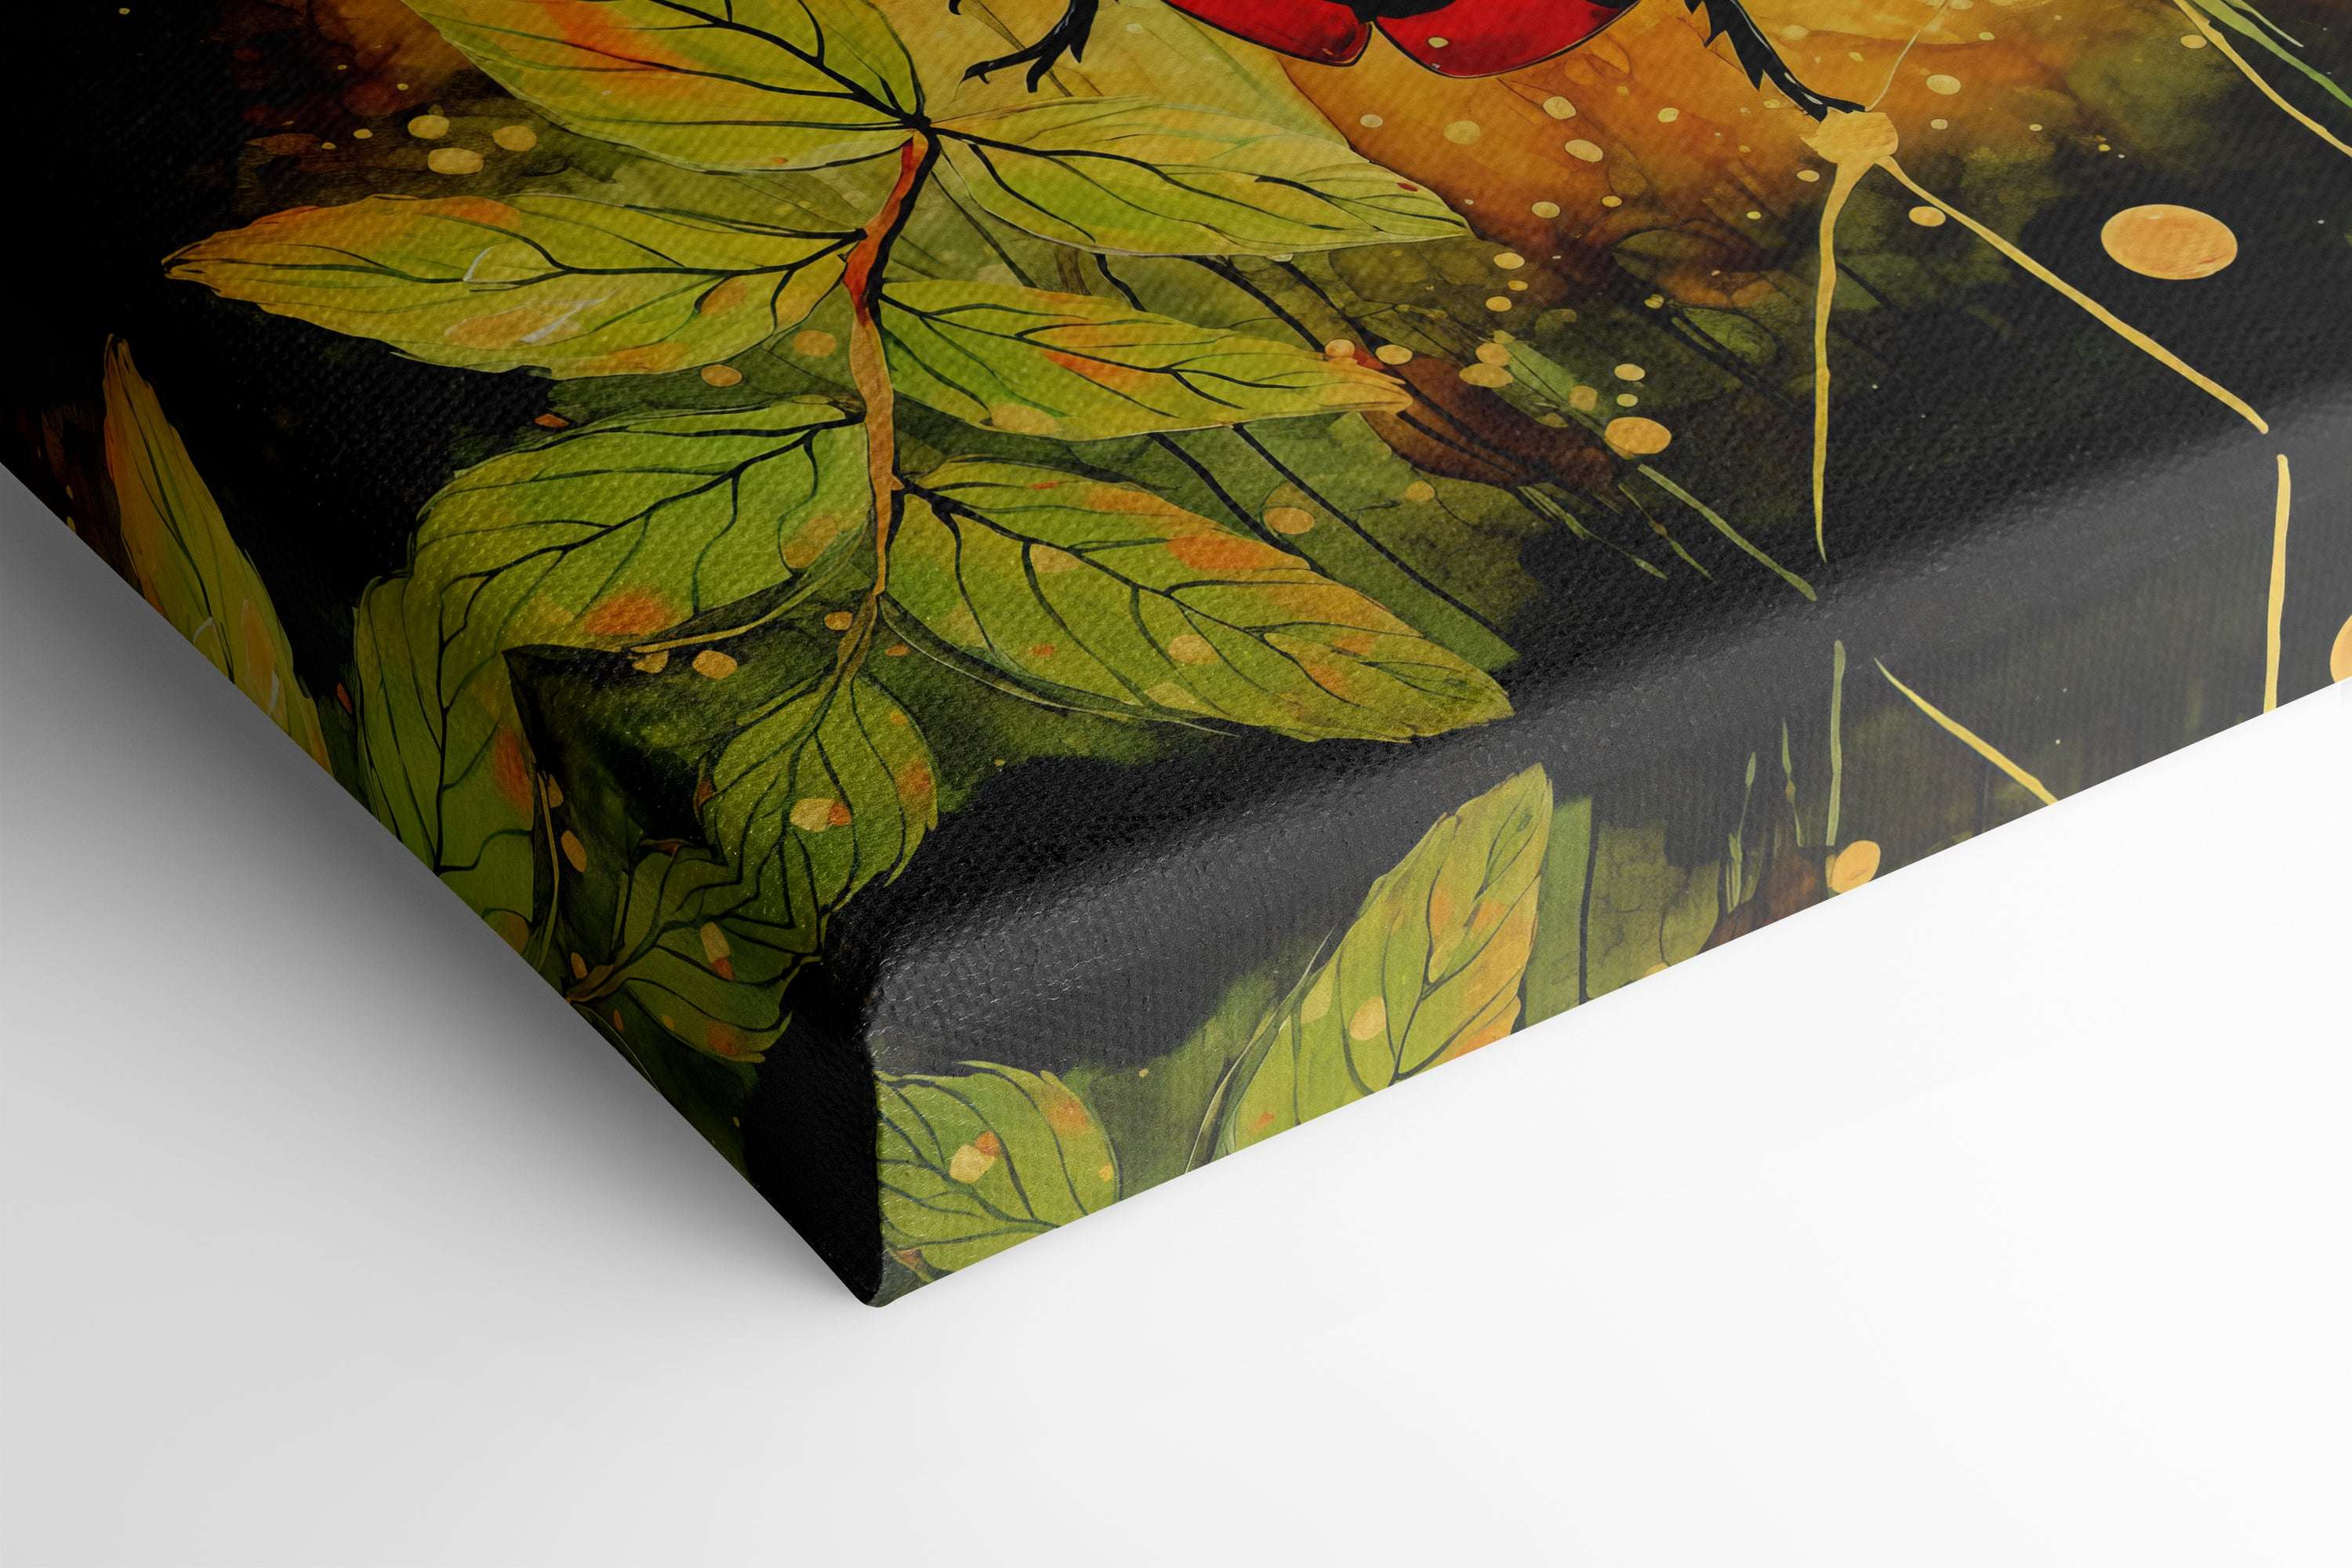 Surrealistic Ladybug on Dark Background - Canvas Print - Artoholica Ready to Hang Canvas Print